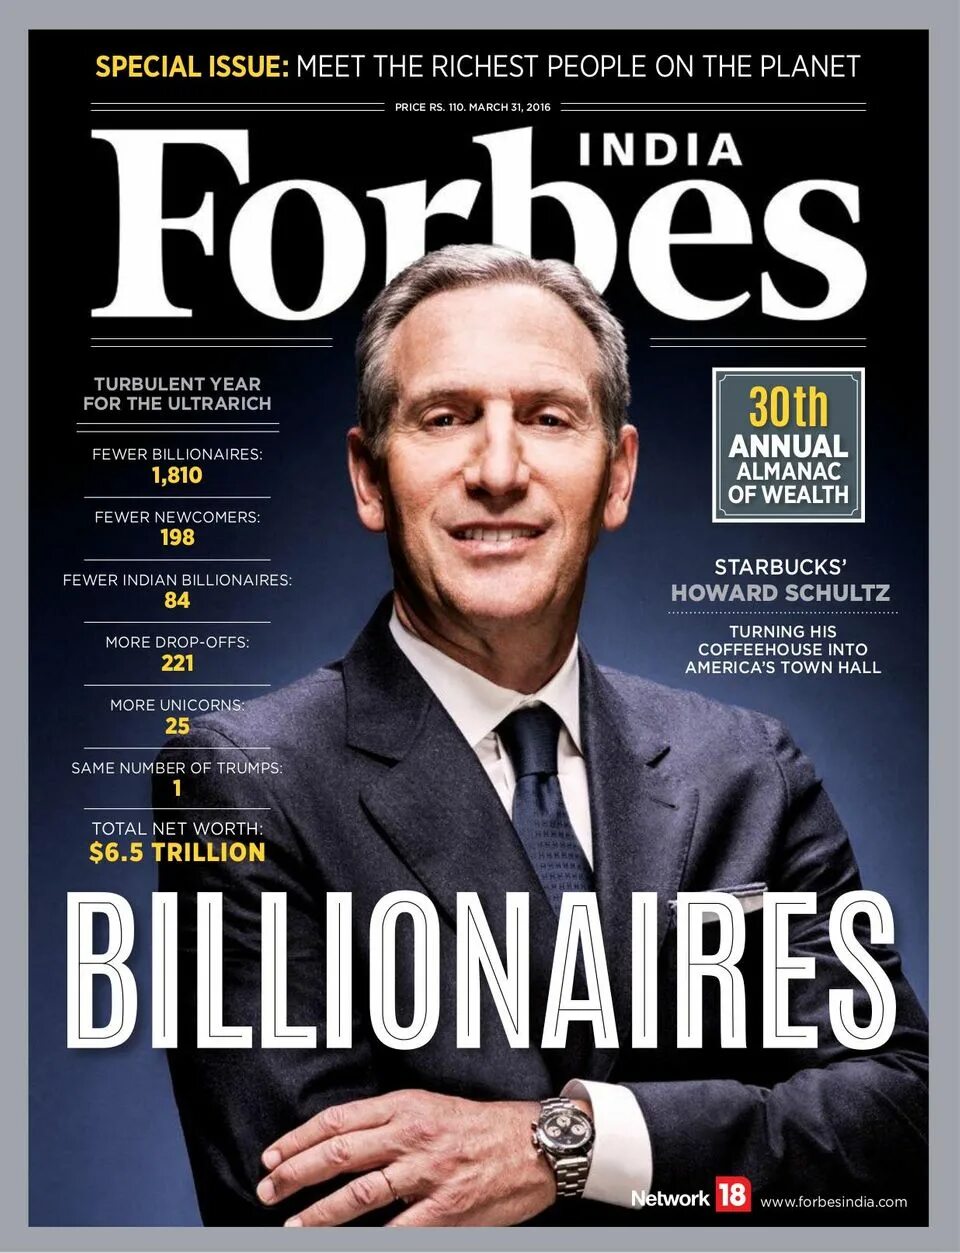 Журнал форбс самые богатые. Обложка журнала форбс. Обложка для журнала. Журнал форбс обложка для фотошопа. Макет журнала Forbes.